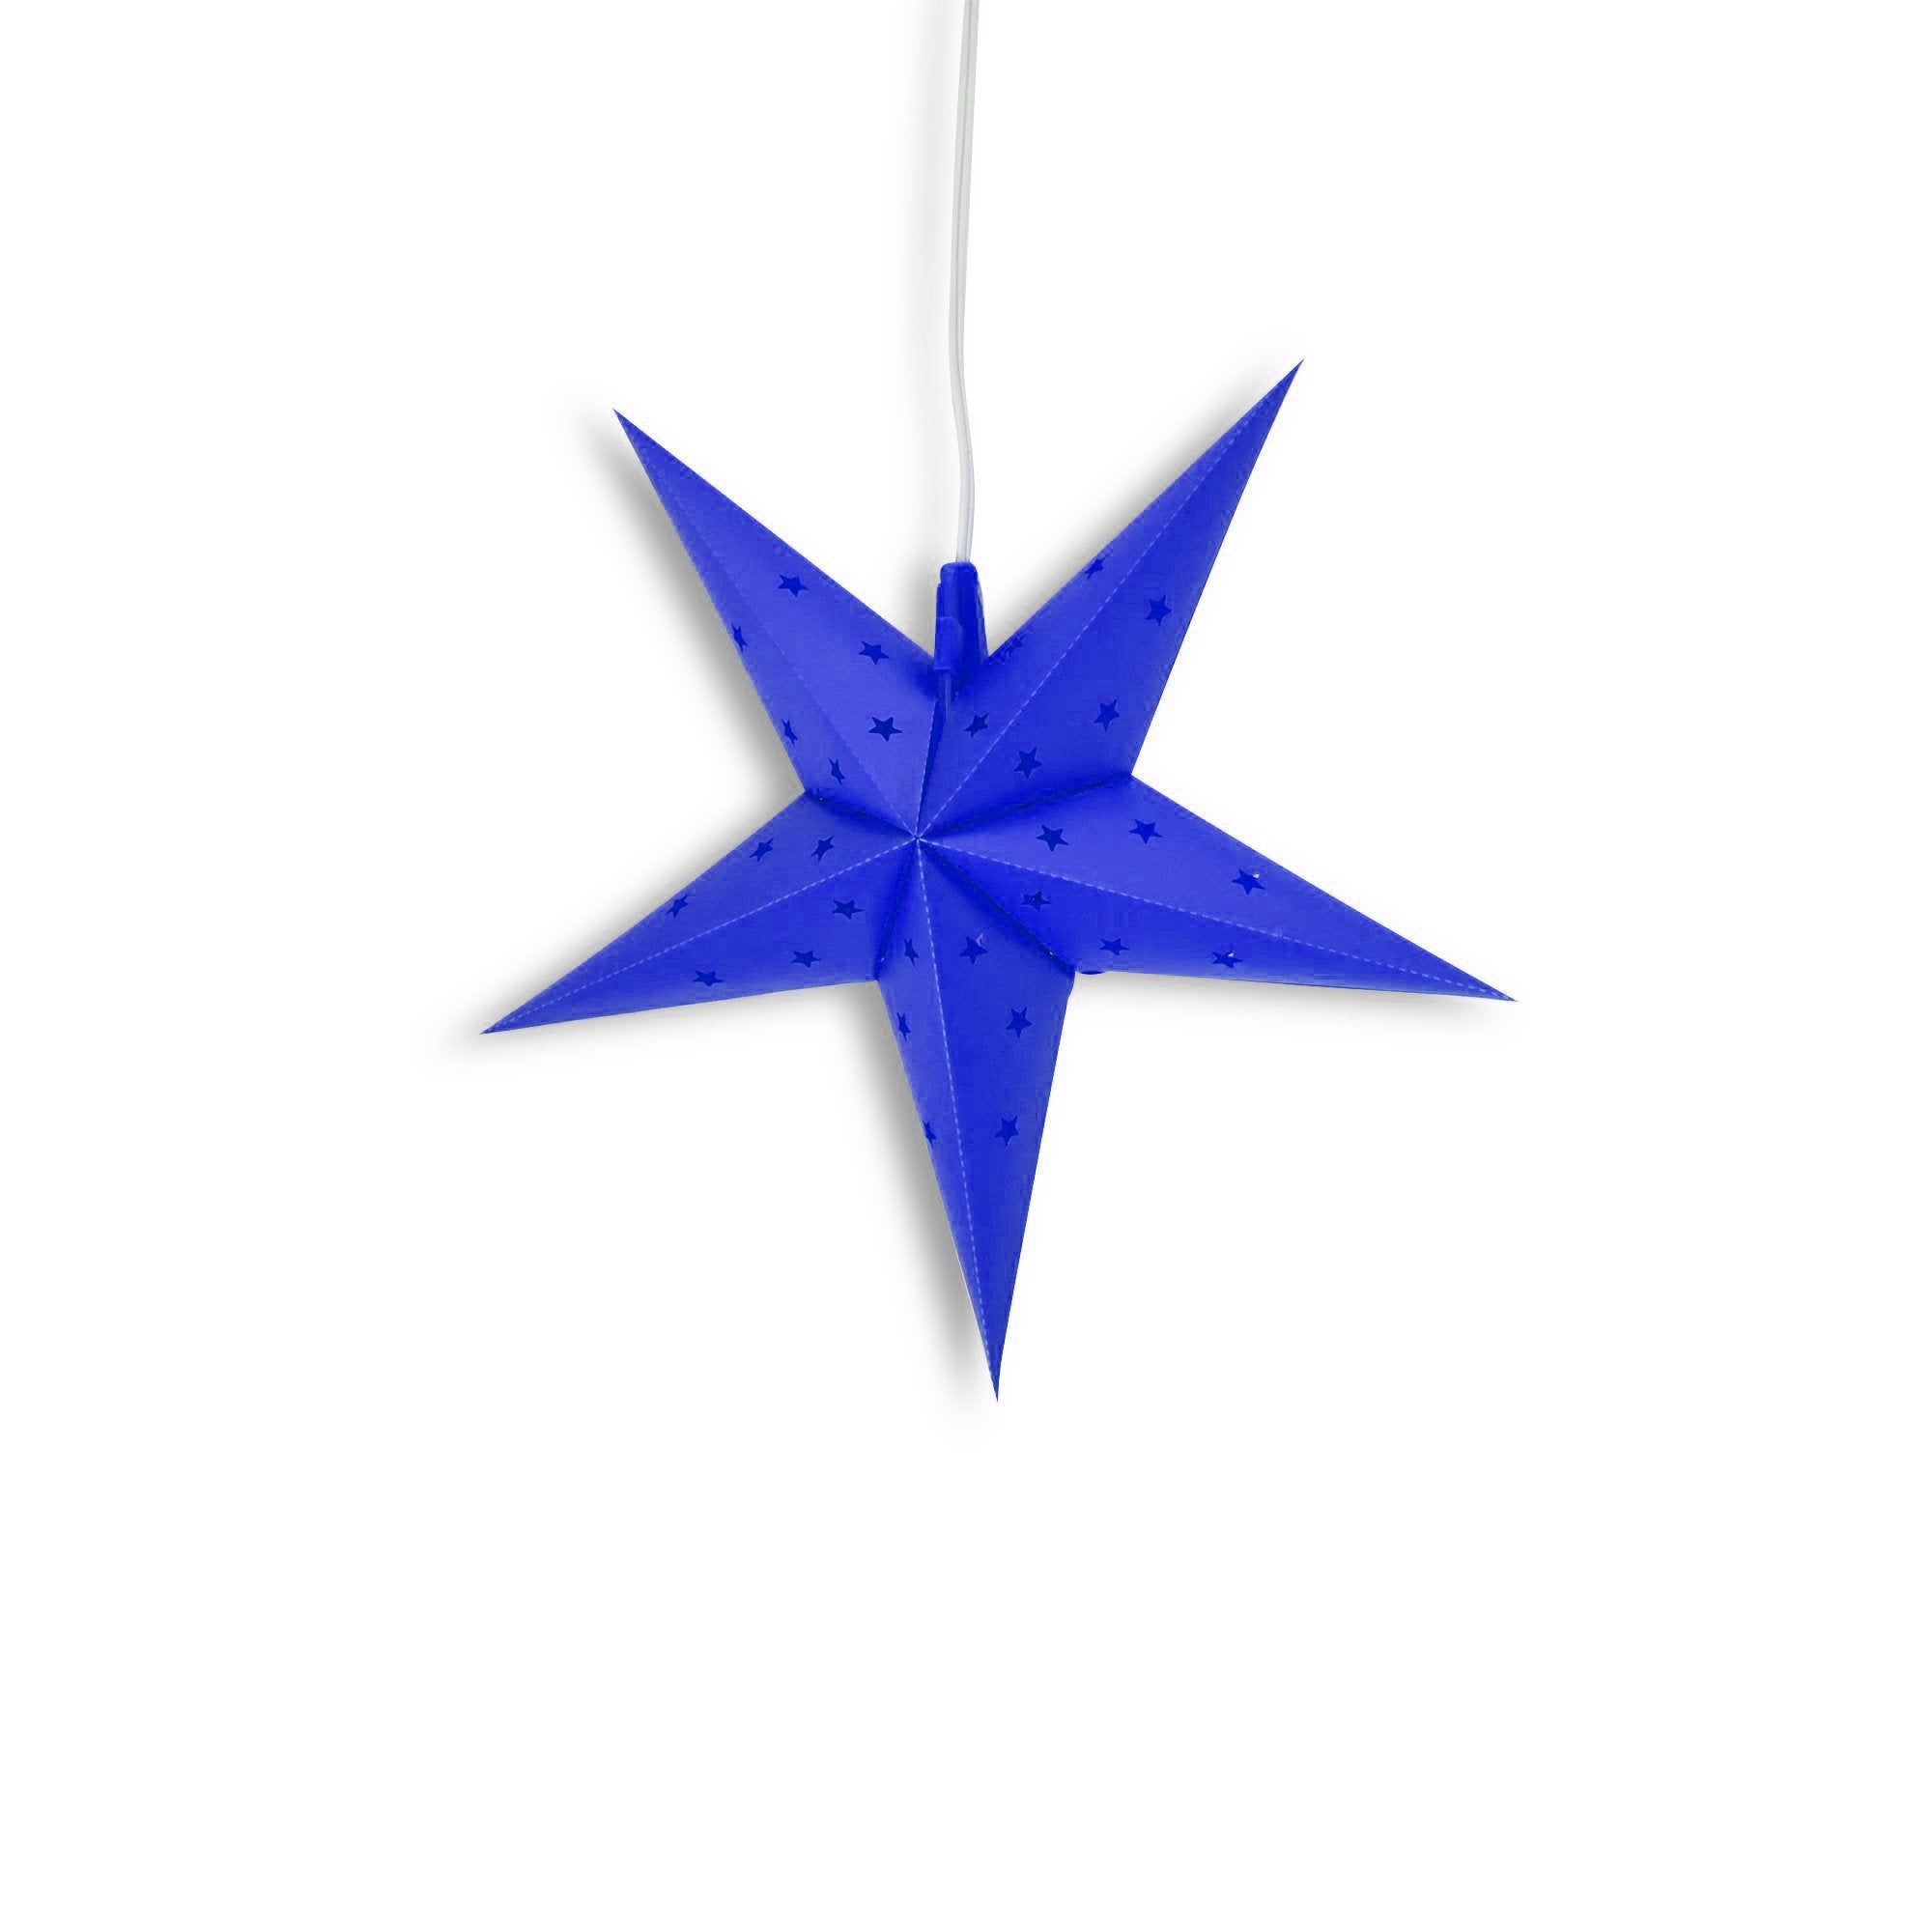 17" Dark Blue Weatherproof Star Lantern Lamp, Hanging Decoration (Shade Only)